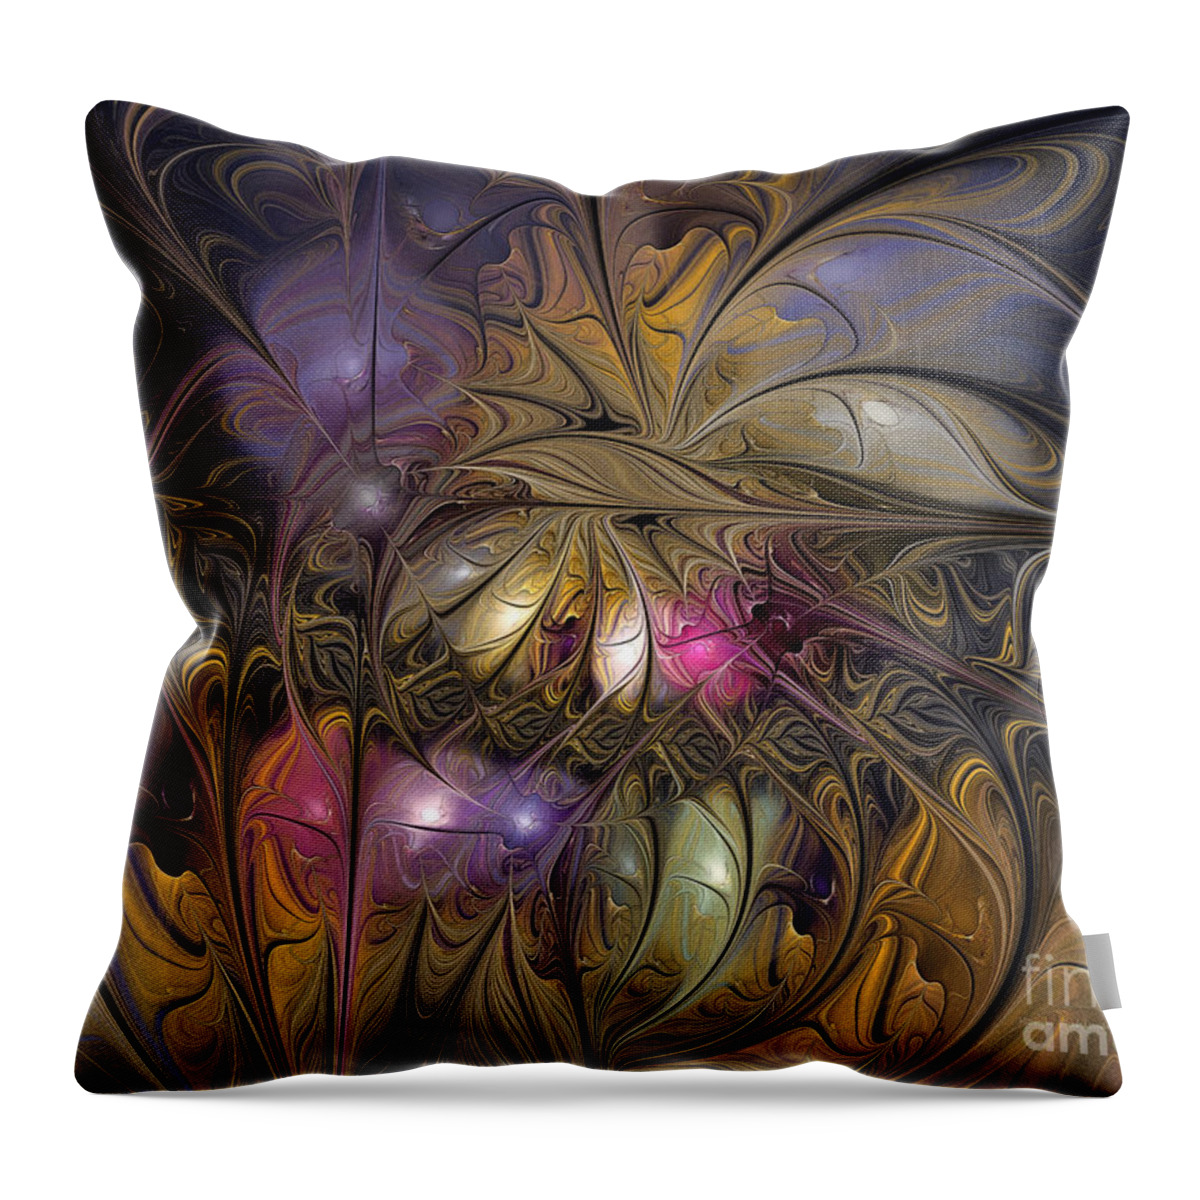 Abstract Throw Pillow featuring the digital art Golden Ornamentations-Fractal Design by Karin Kuhlmann